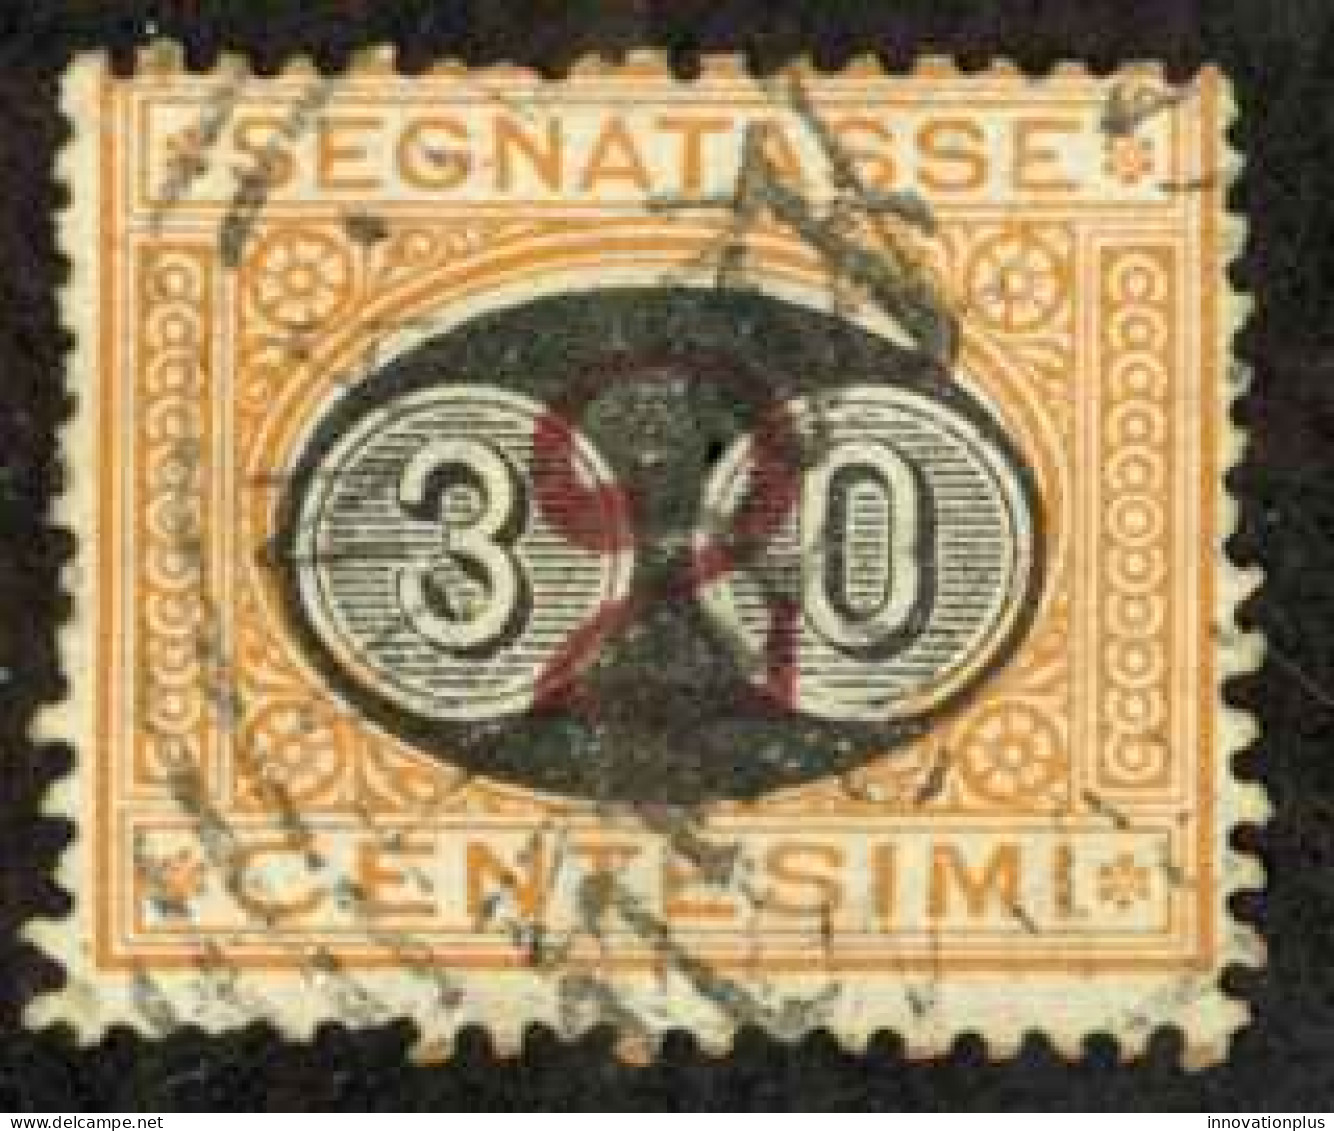 Italy Sc# J27 Used (b) 1890-1891 30c On 2c Postage Due - Segnatasse